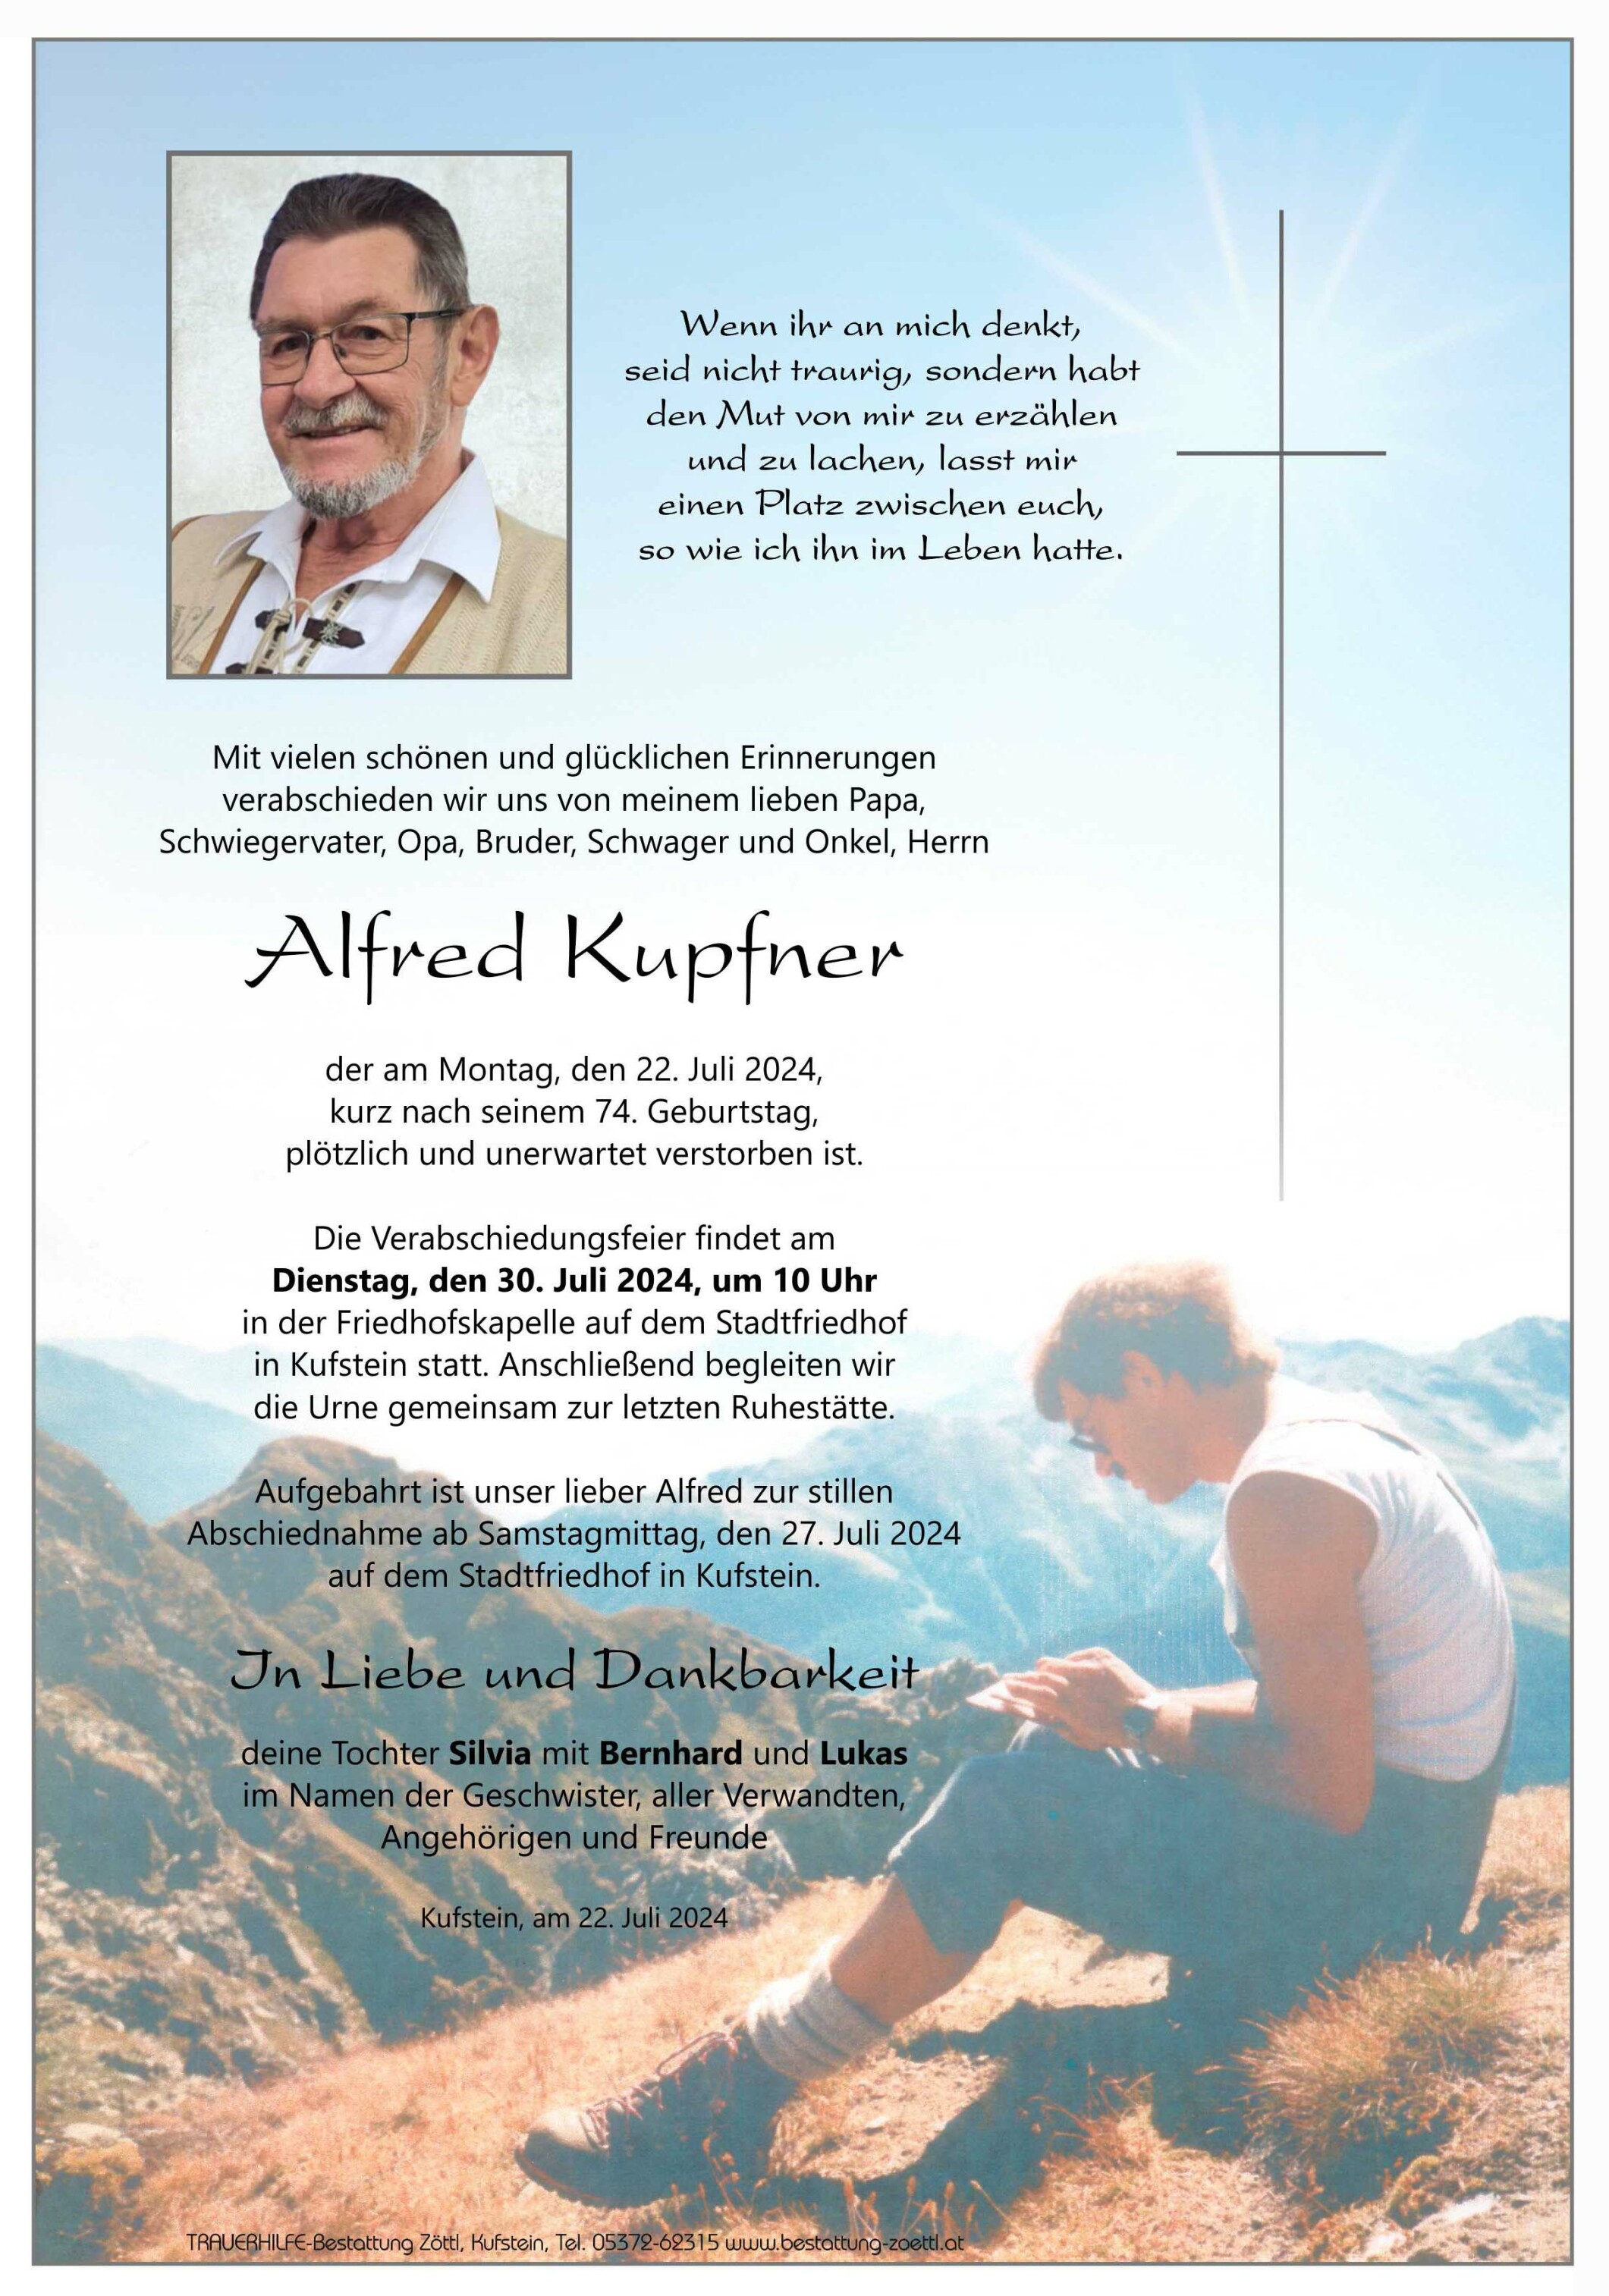 Alfred Kupfner